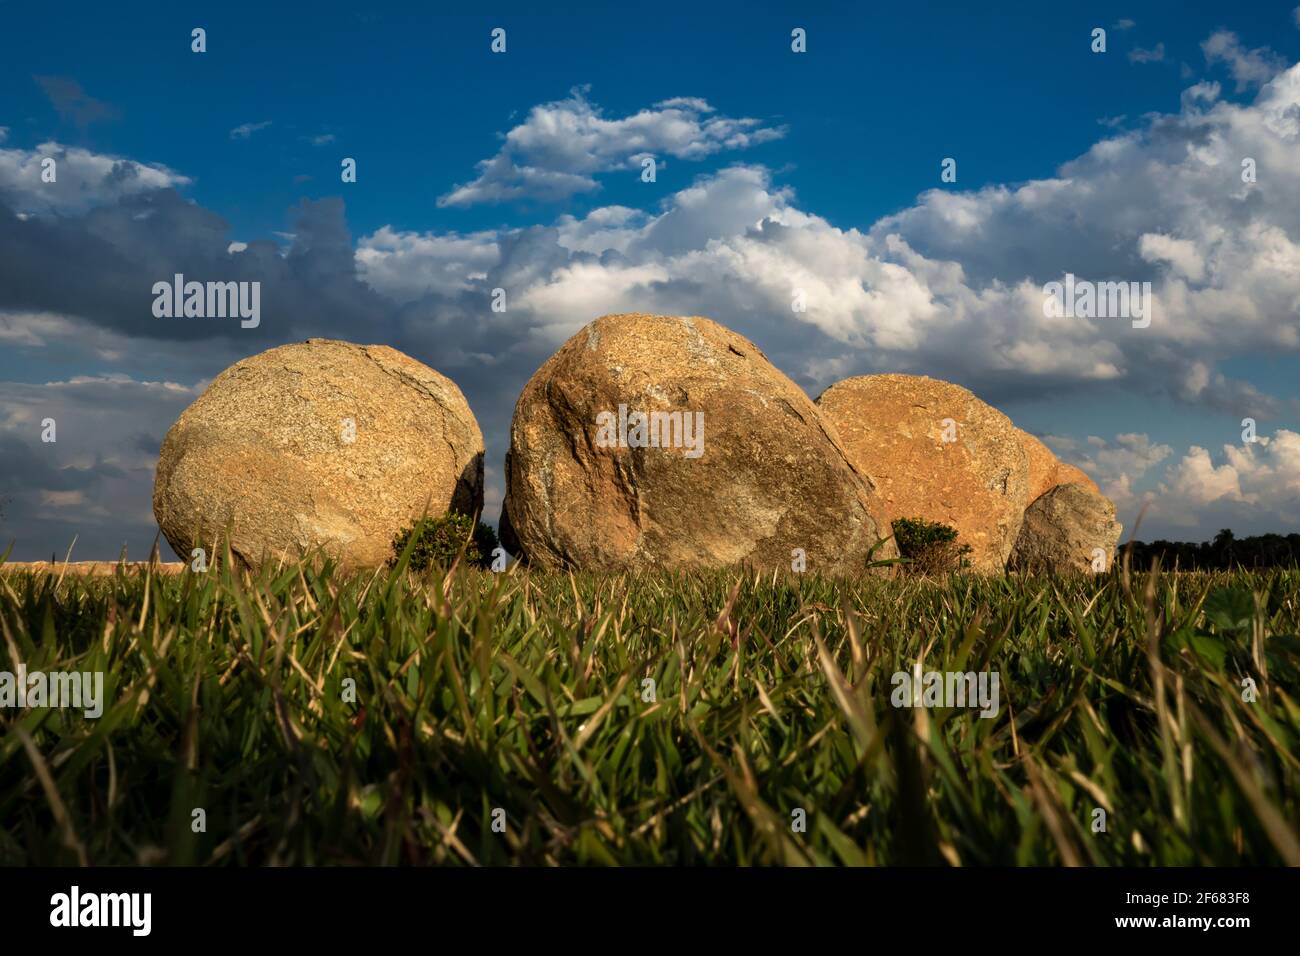 A trinity of rocks on a grass field Stock Photo